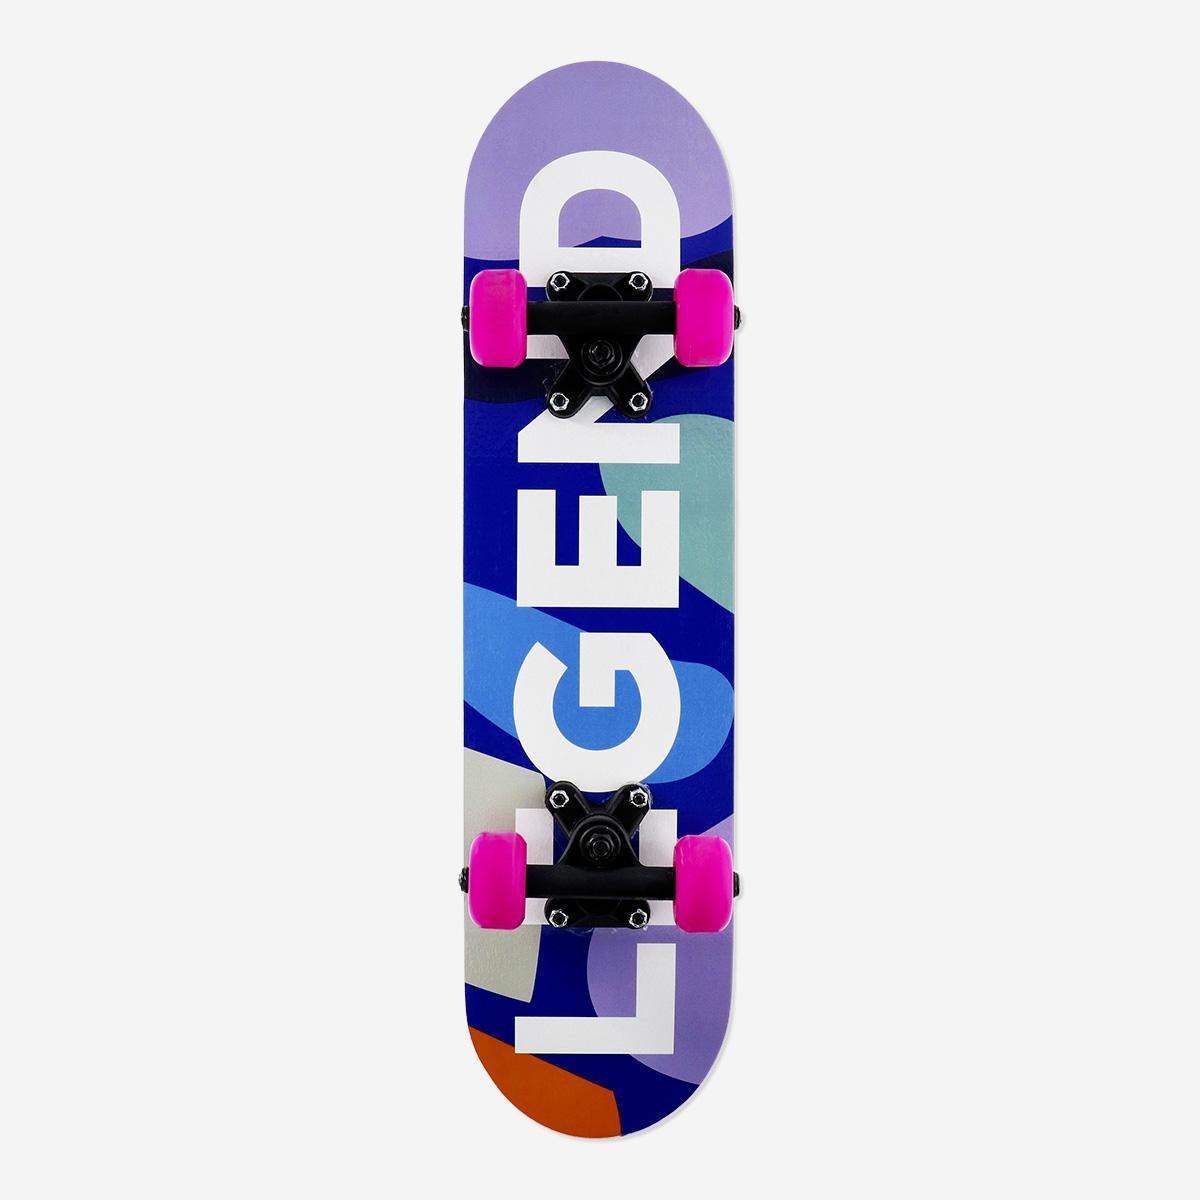 Blue patterned skateboard